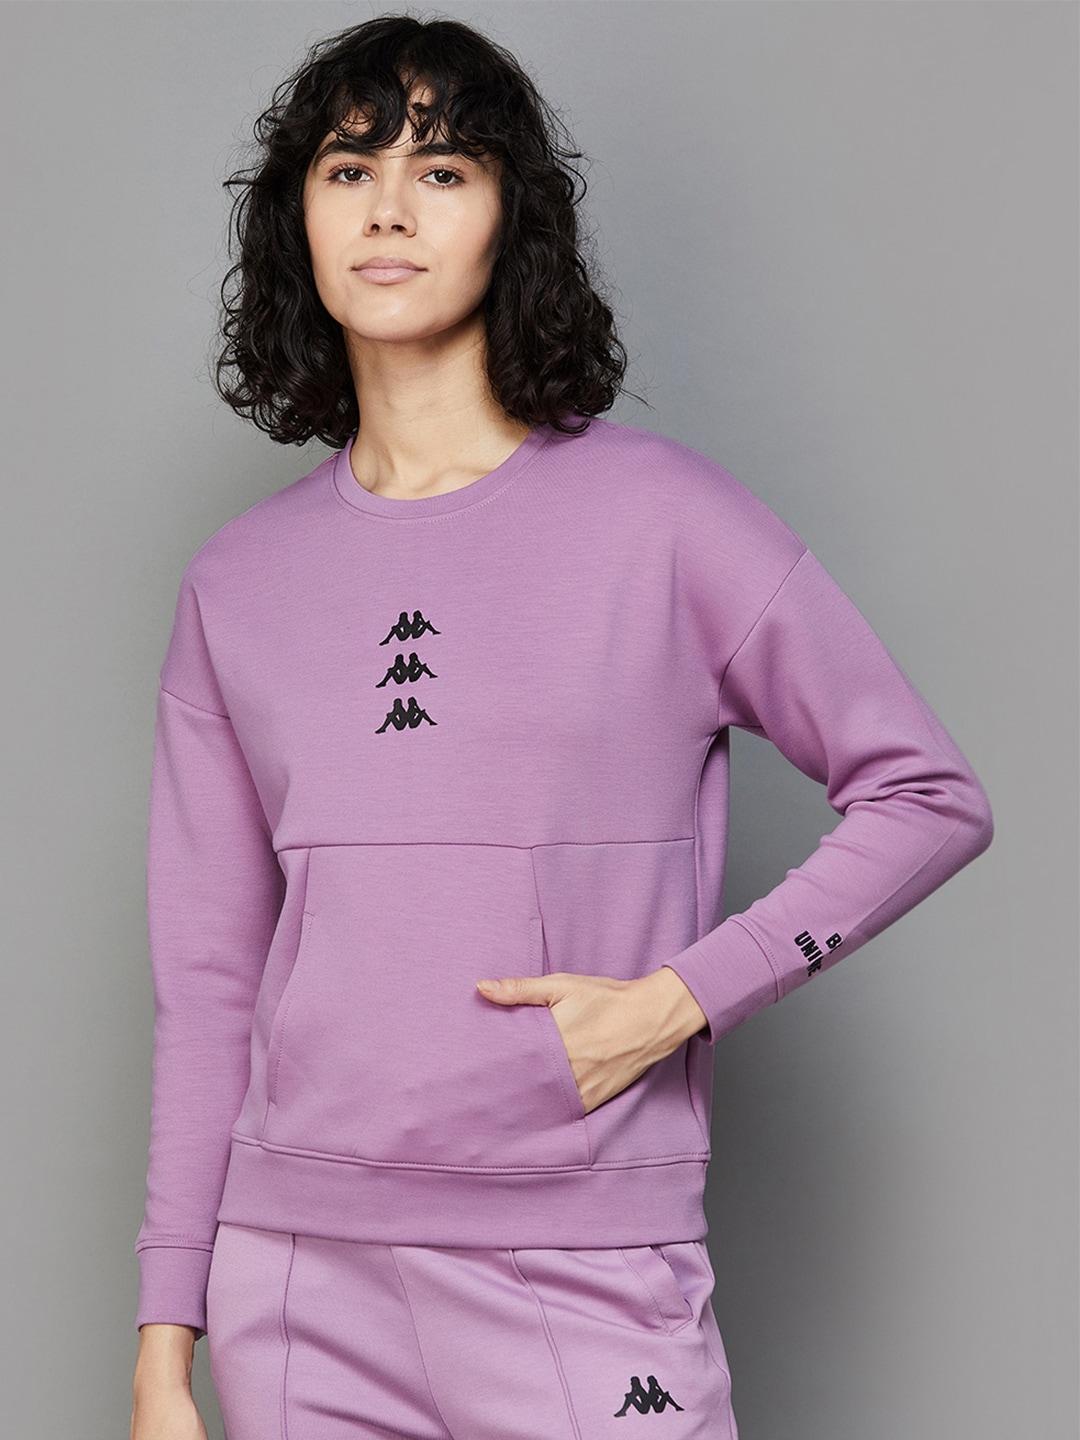 kappa-graphic-printed-round-neck-long-sleeve-pullover-sweatshirt